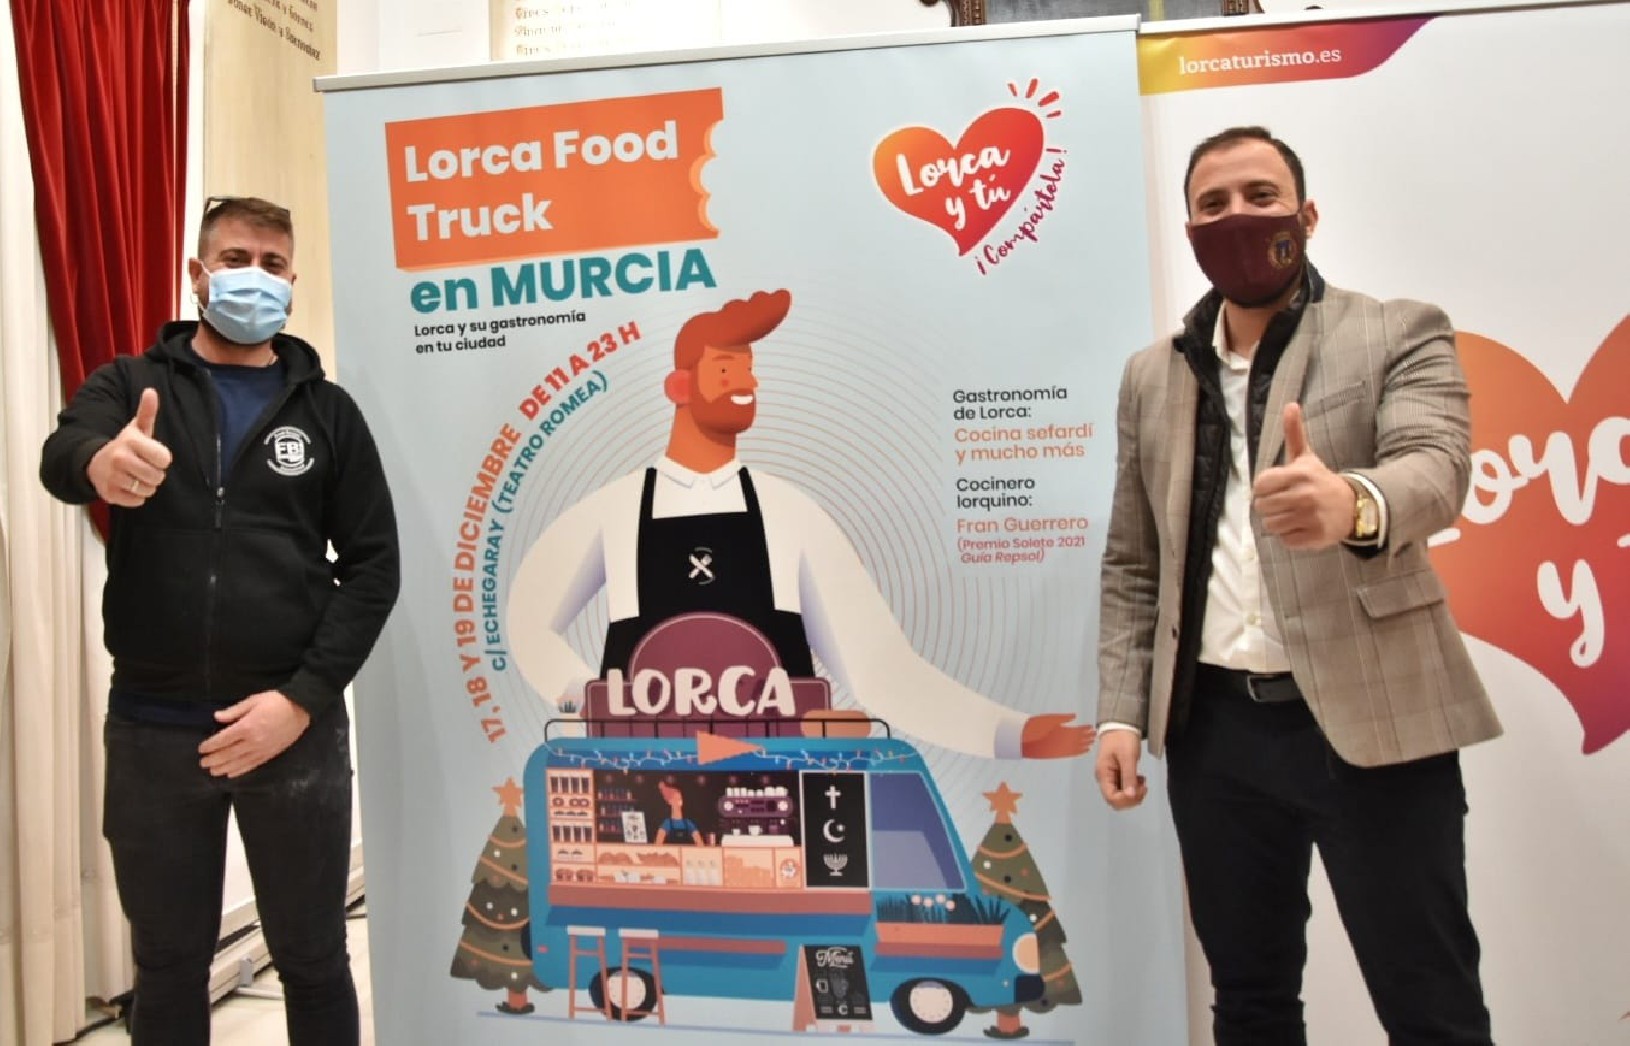 Lorca food truck